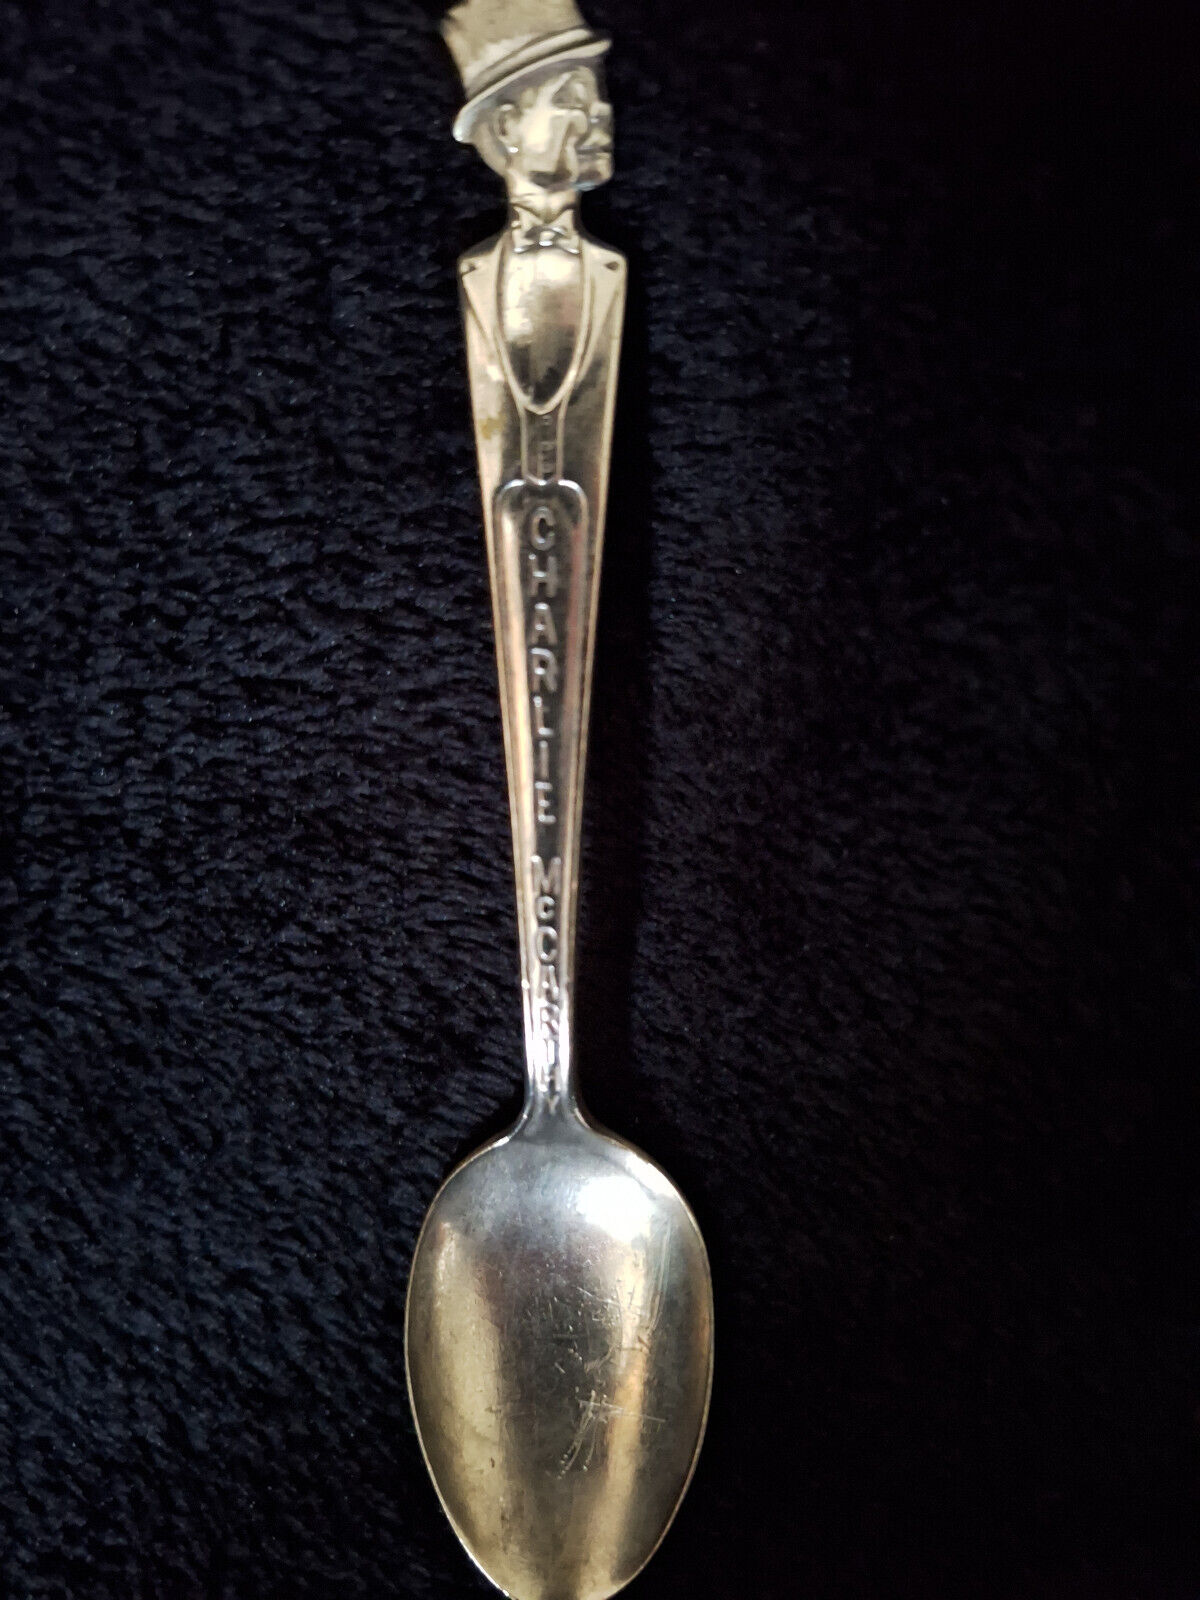 Vintage 1939 Charlie McCarthy silverplate spoon, Chase & Sanborne giveaway